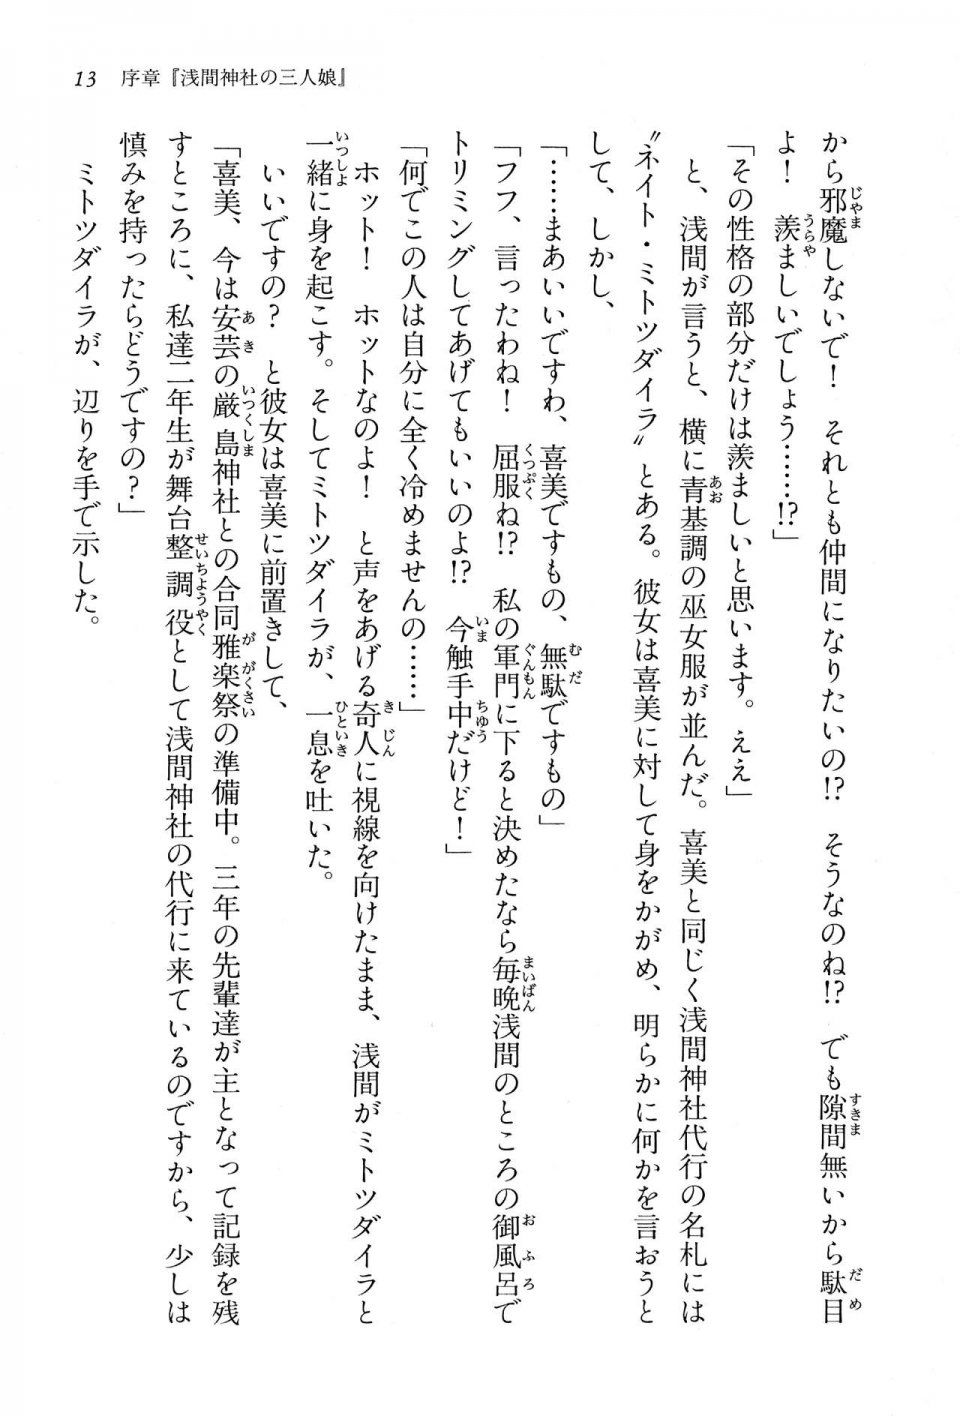 Kyoukai Senjou no Horizon BD Special Mininovel Vol 1(1A) - Photo #17